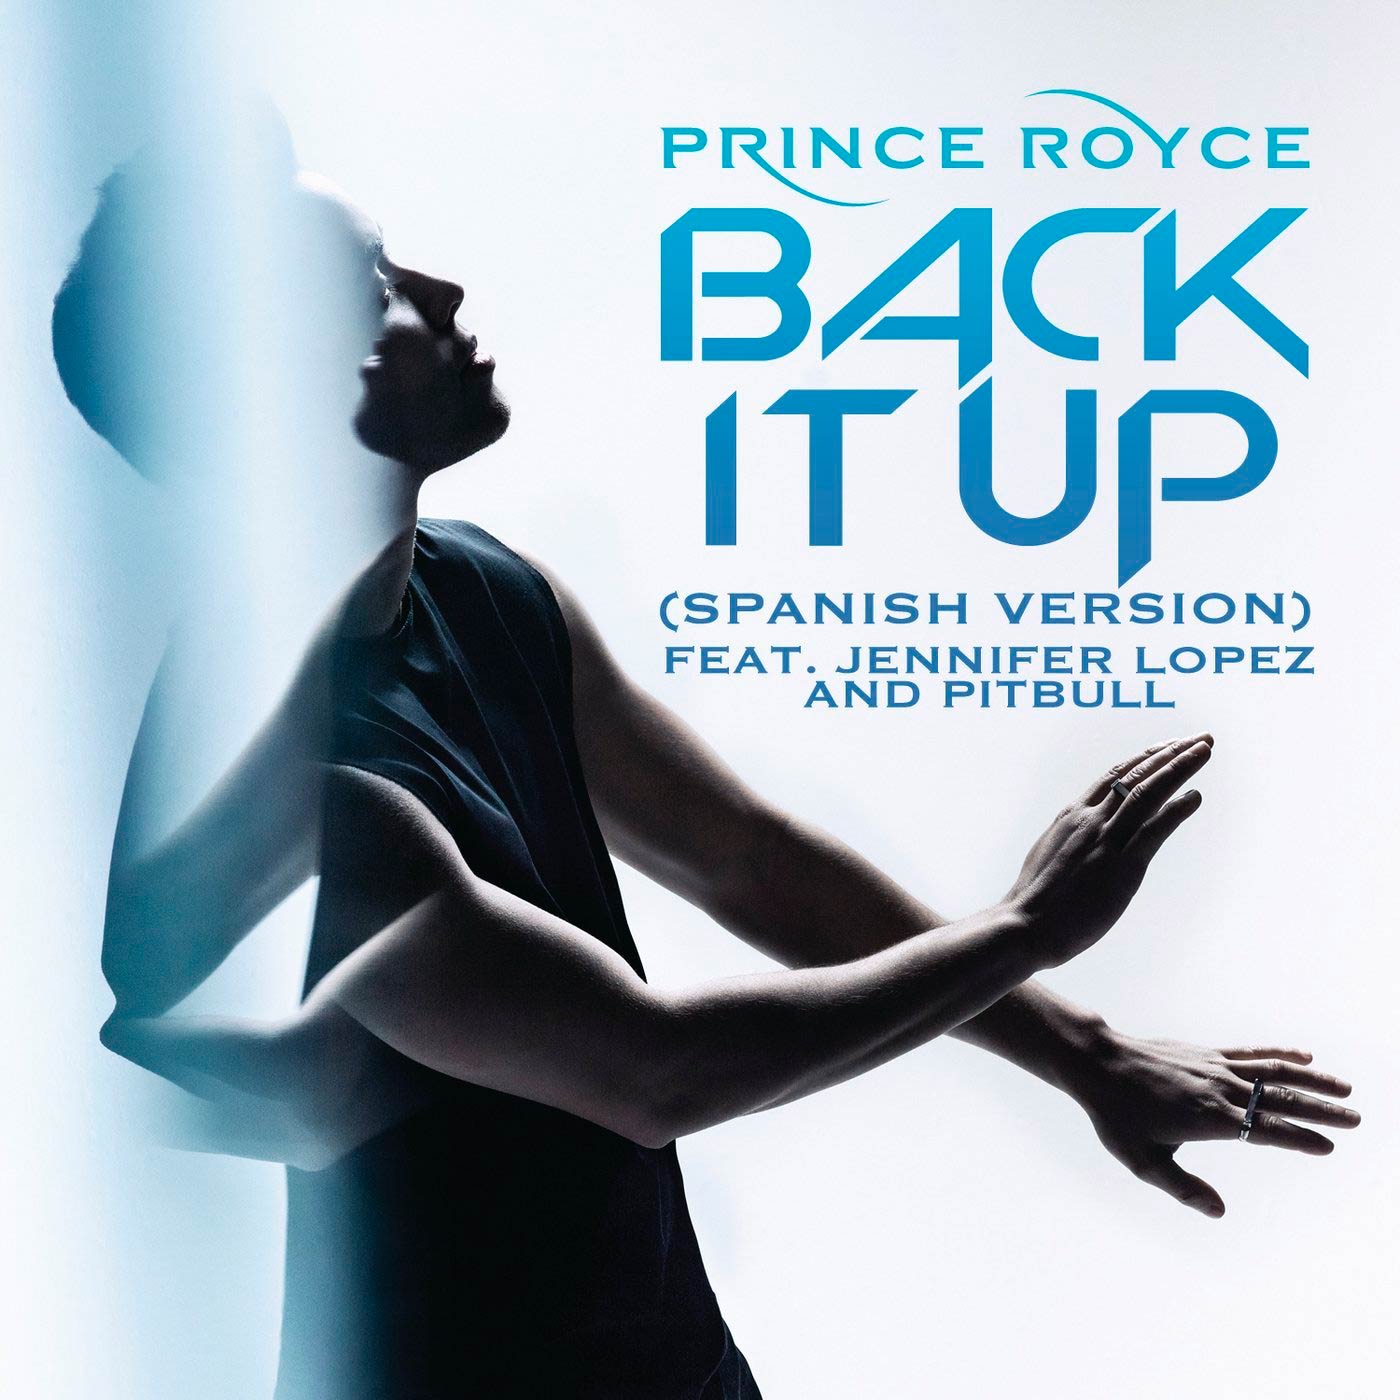 Prince Royce con Jennifer Lopez y Pitbull: Back it up, la portada de la